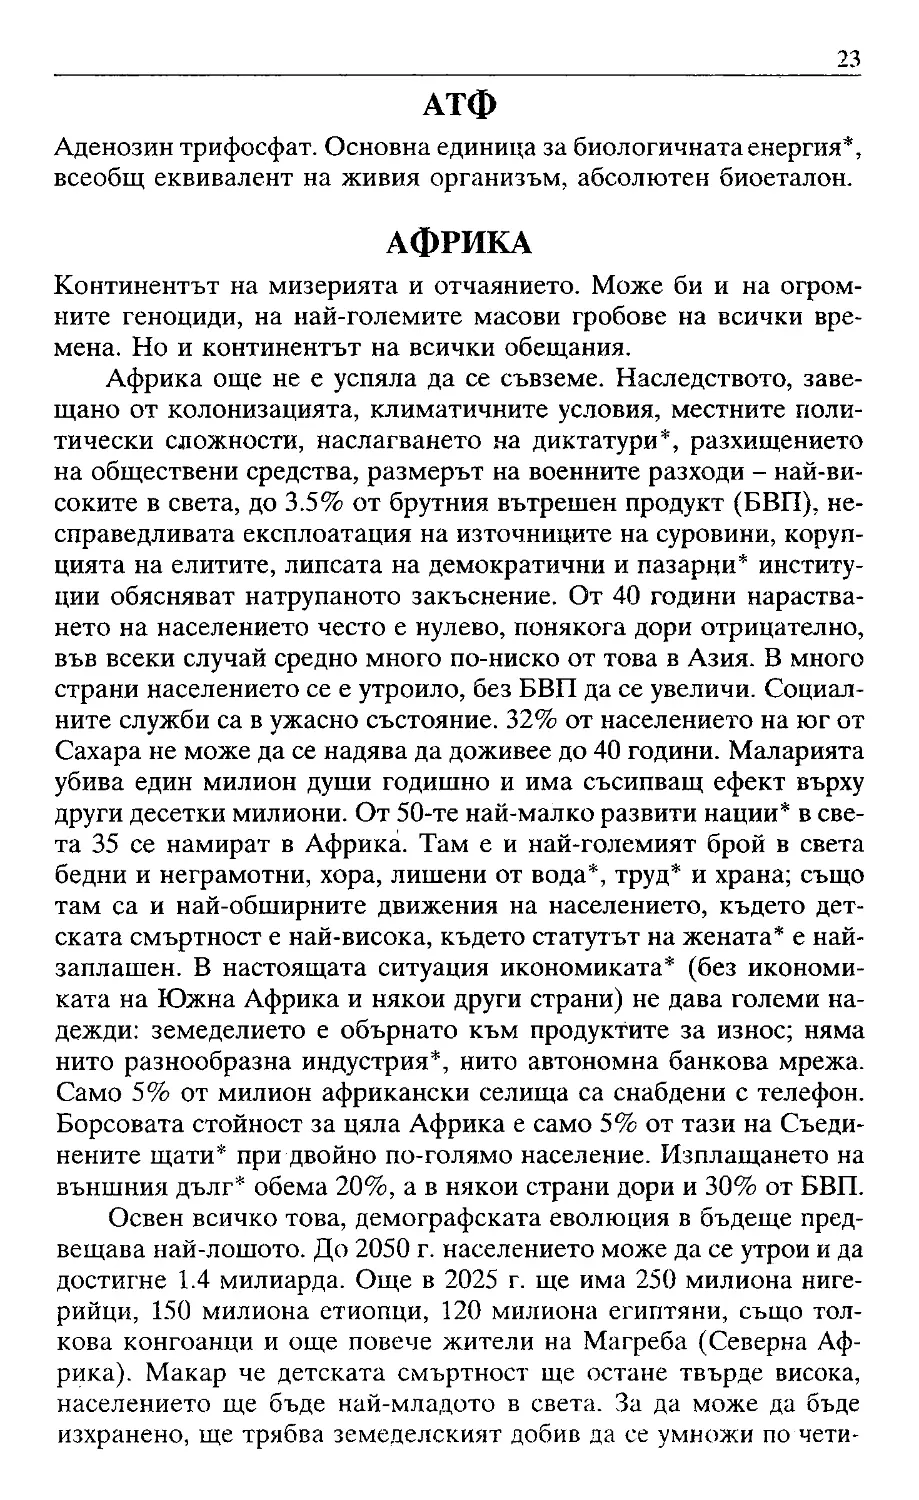 ﻿Жак Атали. Речник на 21 век_Page_010_Image_0001_2